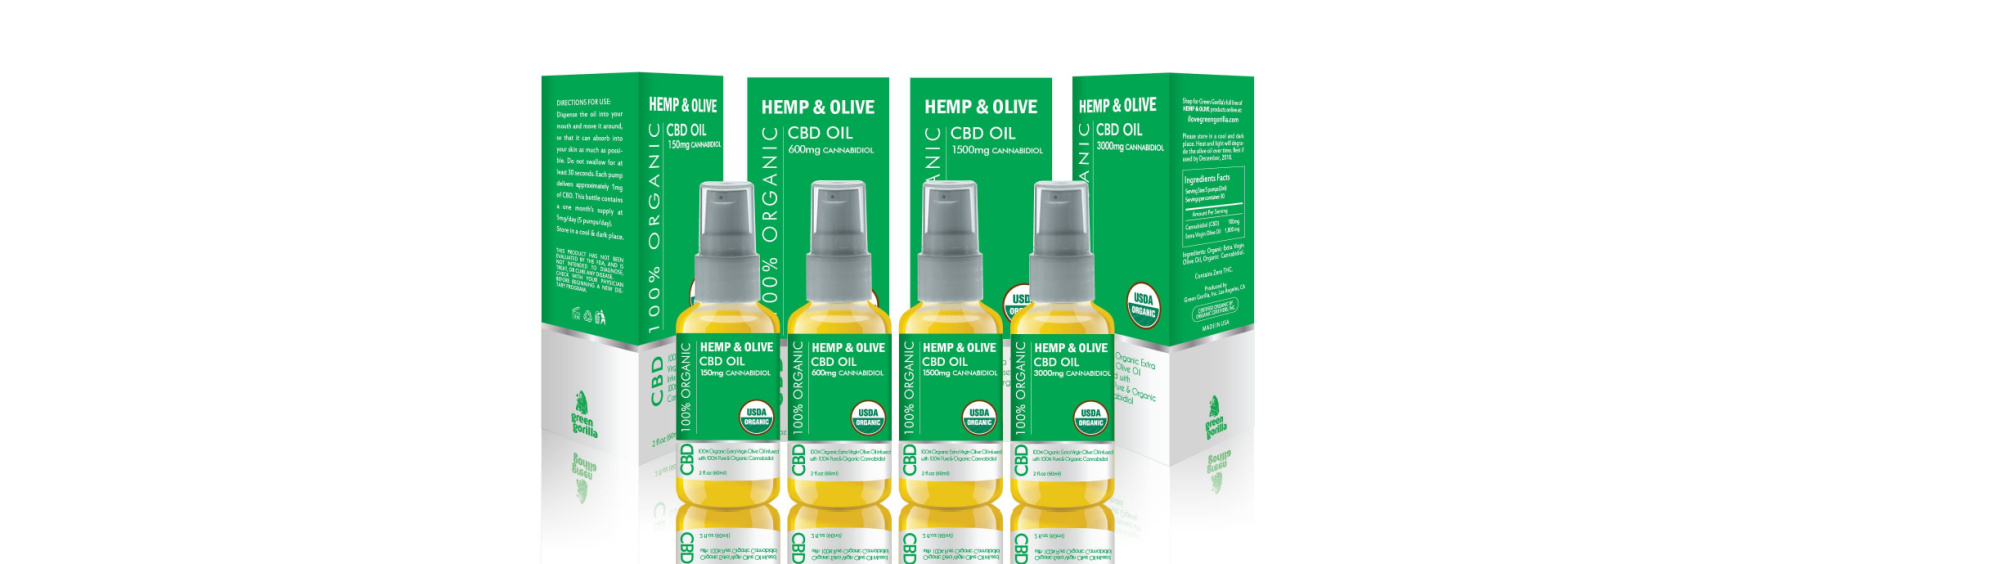 image of green gorilla cbd oil